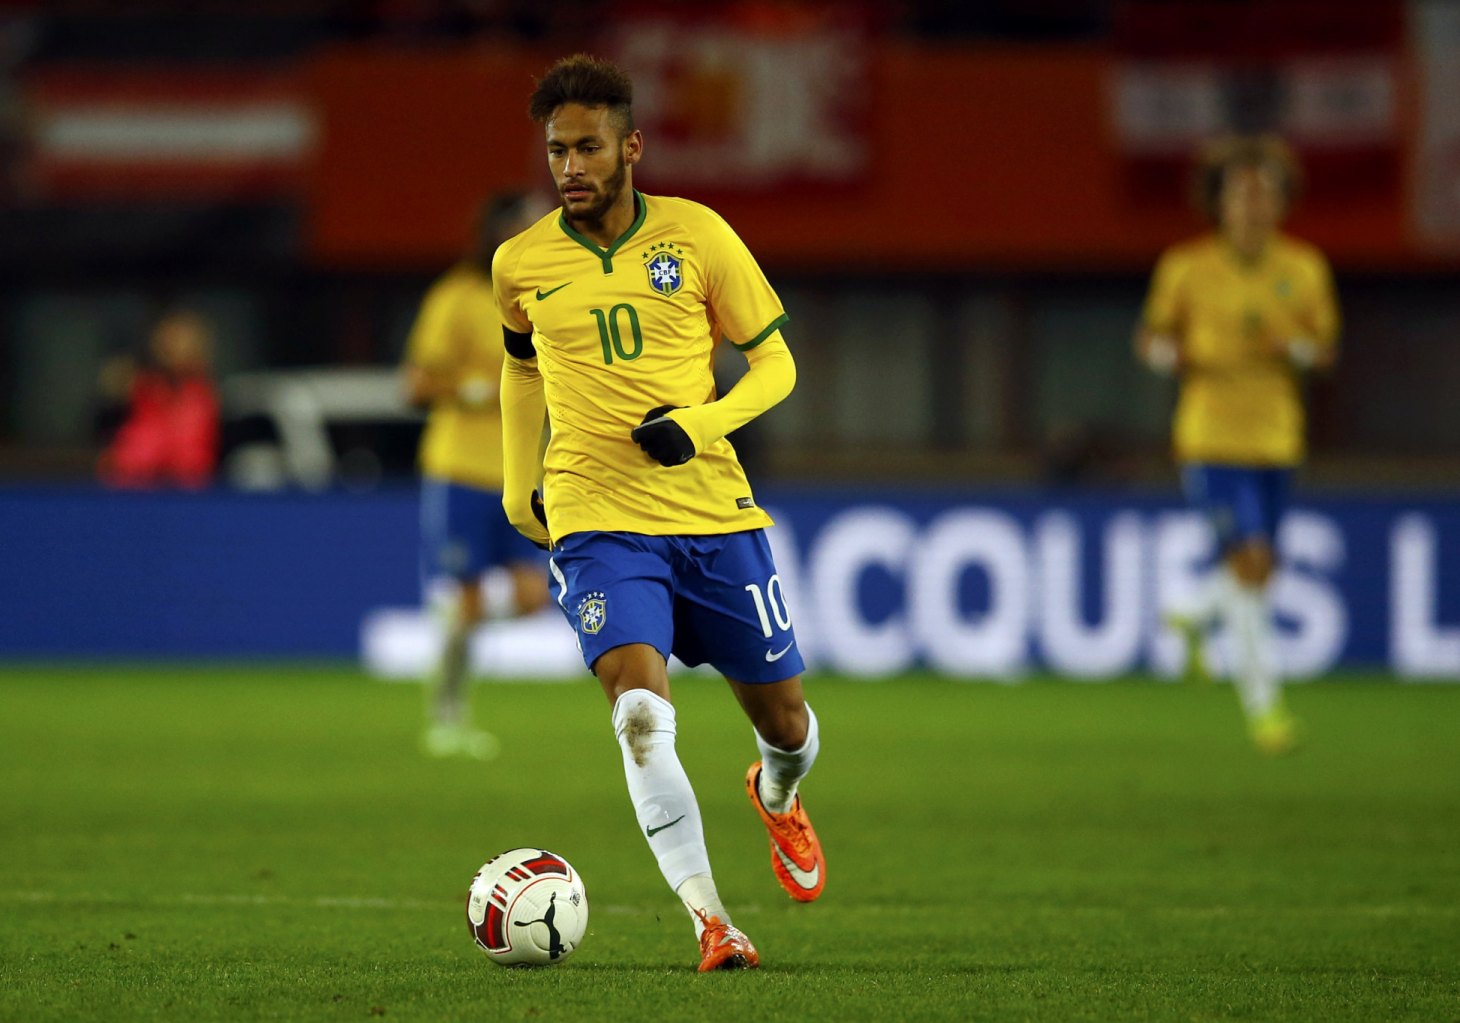 Neymar moving the ball forward in Vienna